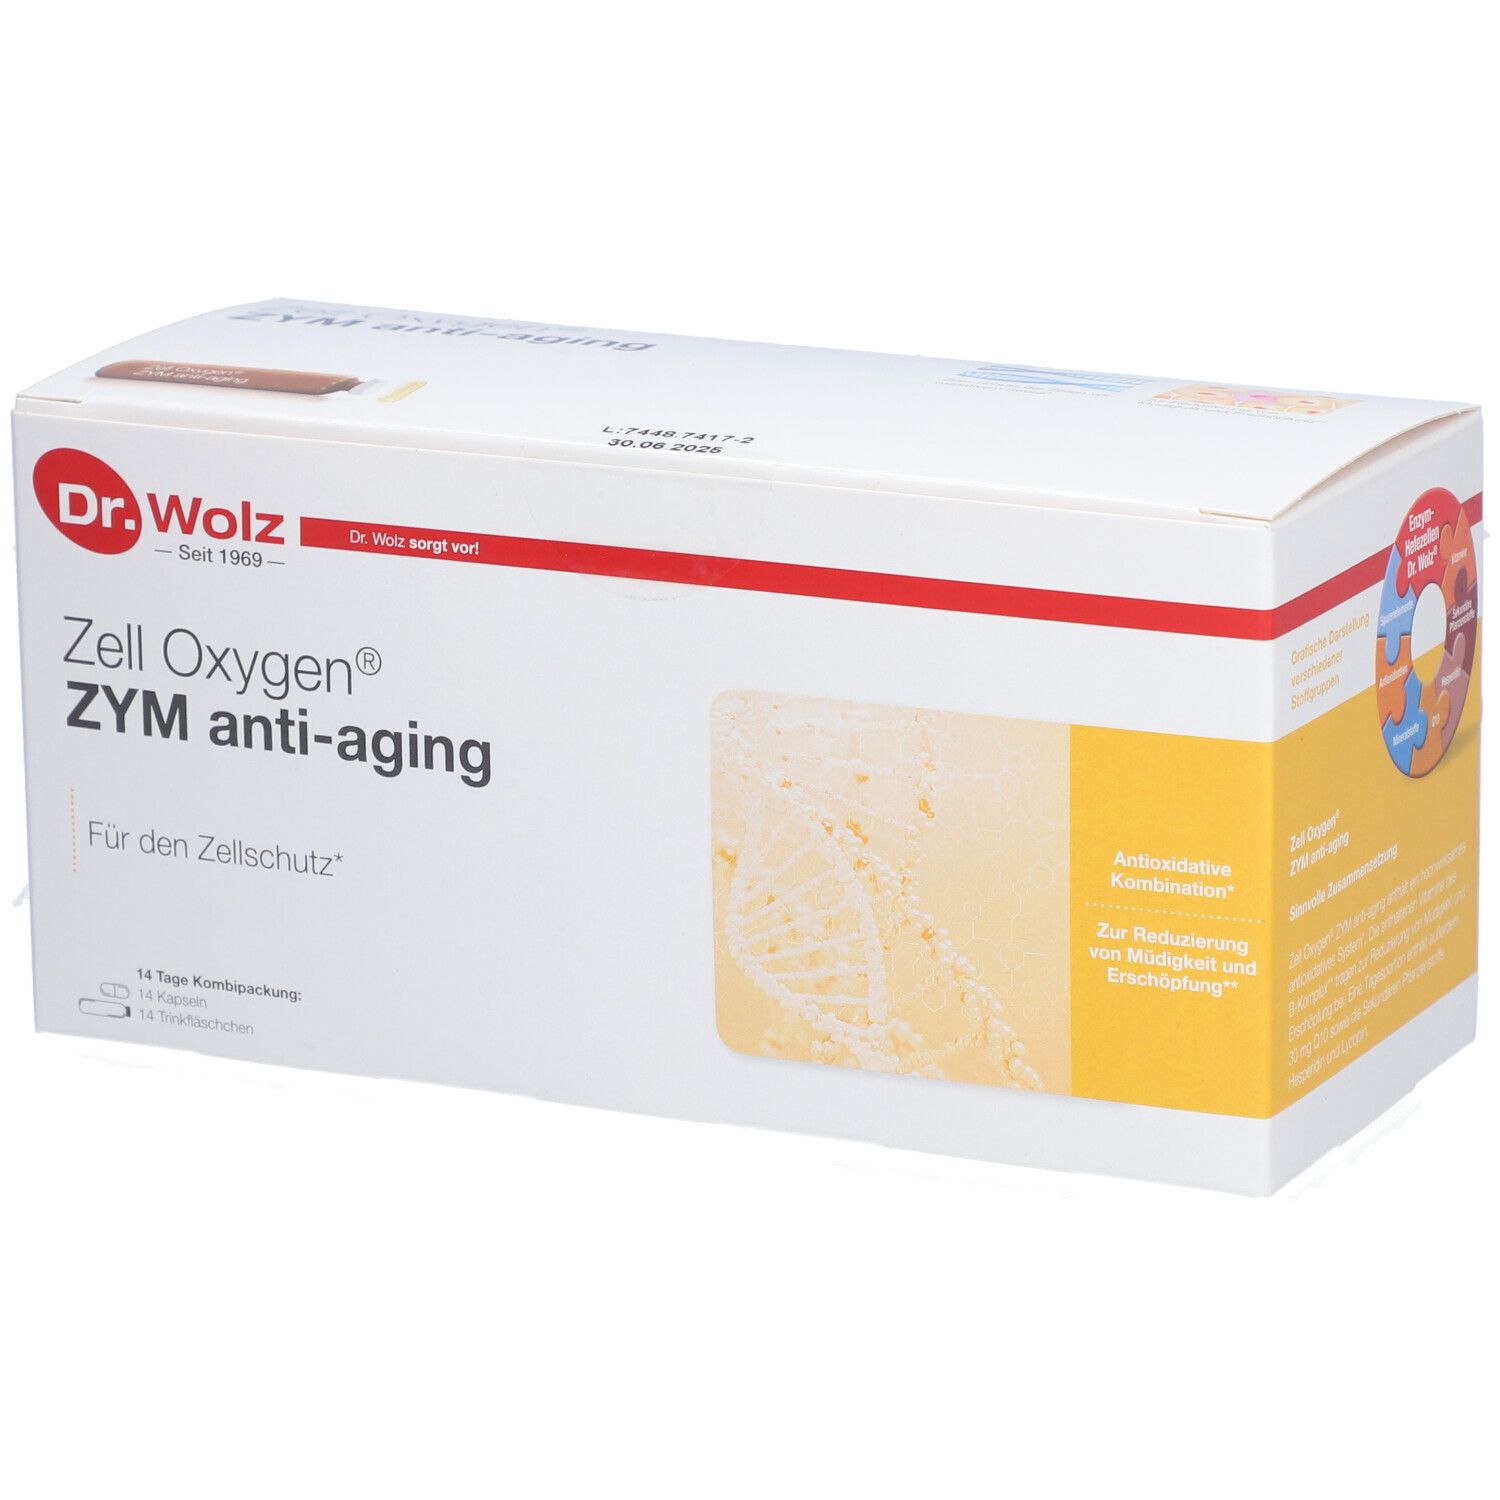 Zell Oxygen® ZYM anti-aging